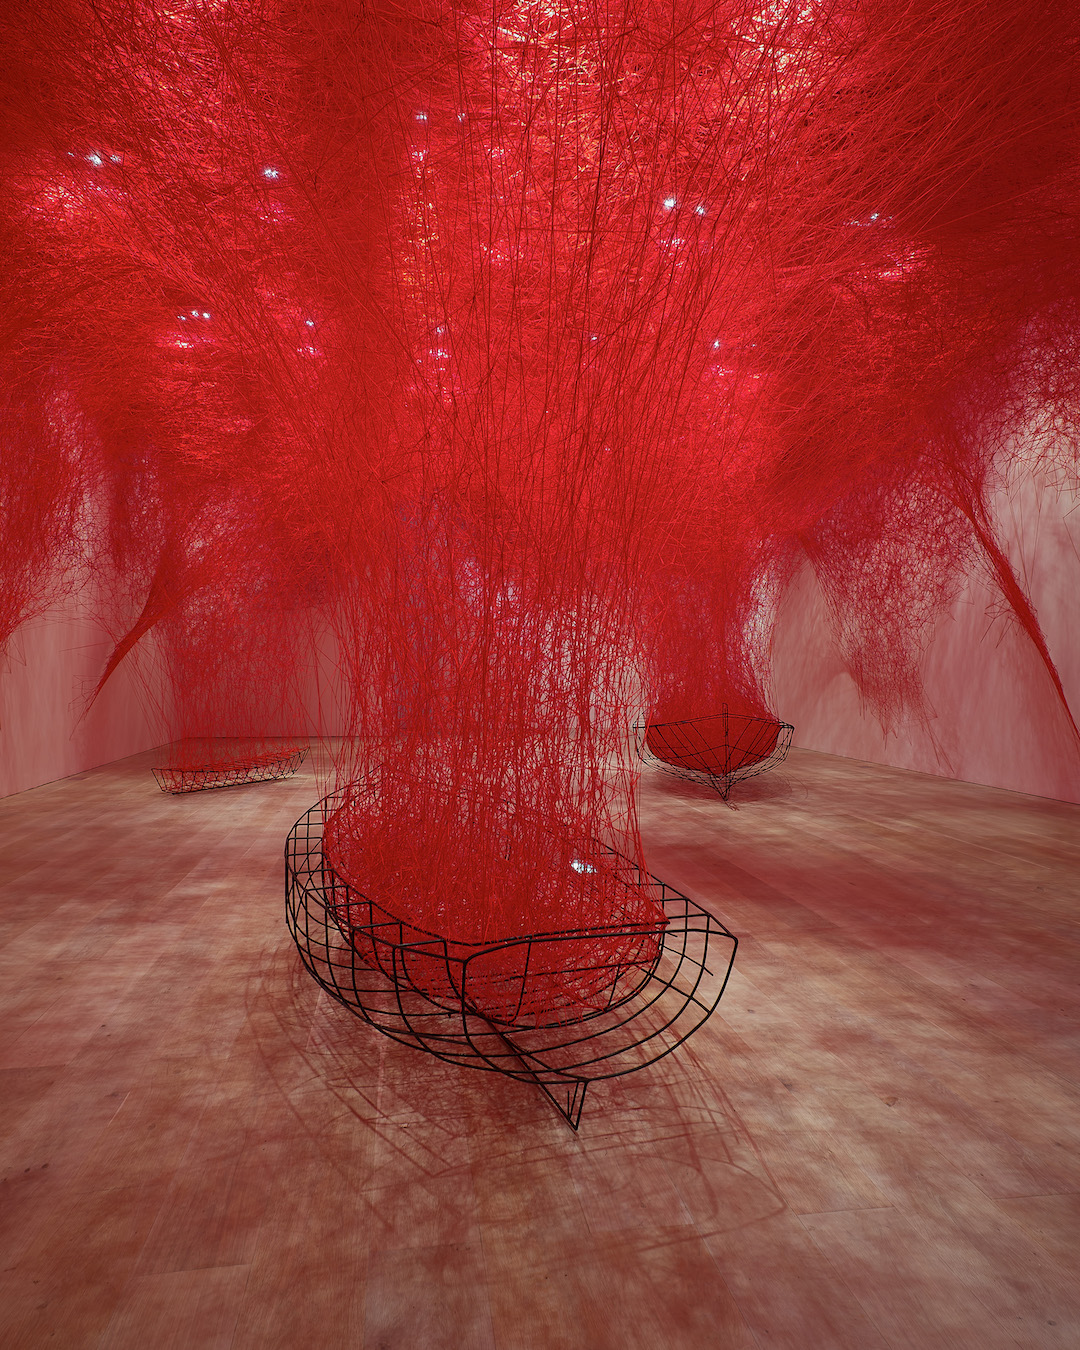 Chiharu Shiota art piece of red thread